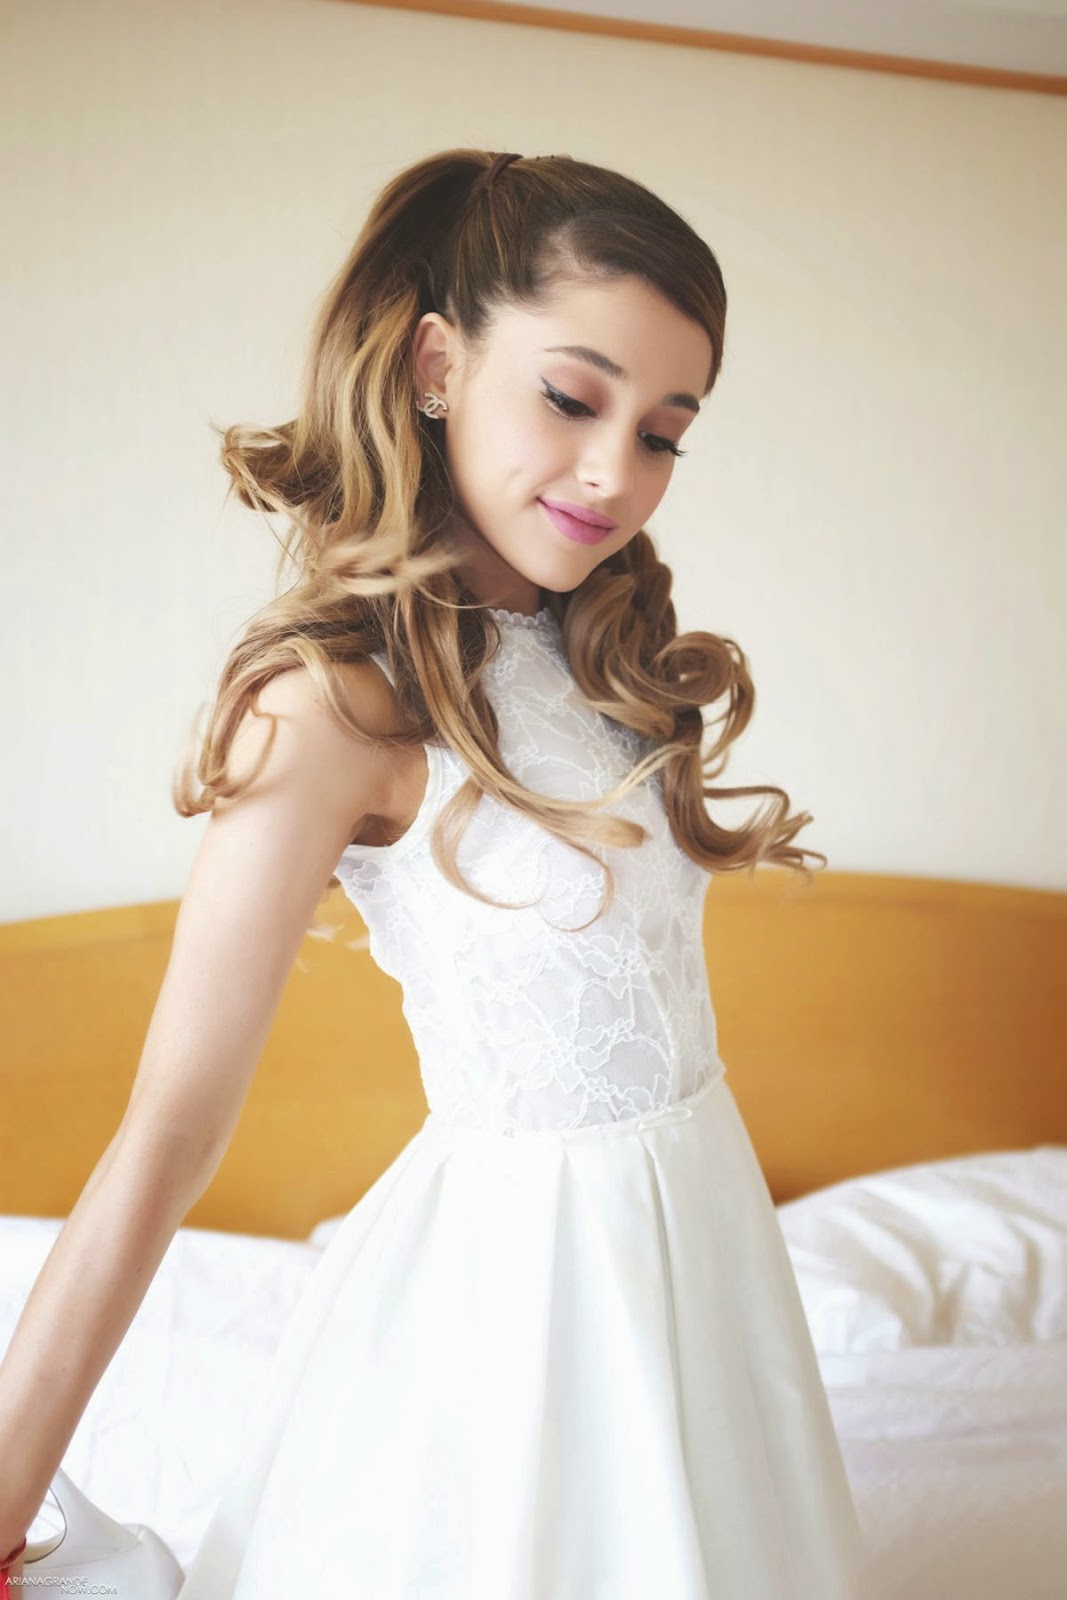 Ariana Grande HD Wallpapers Free Download